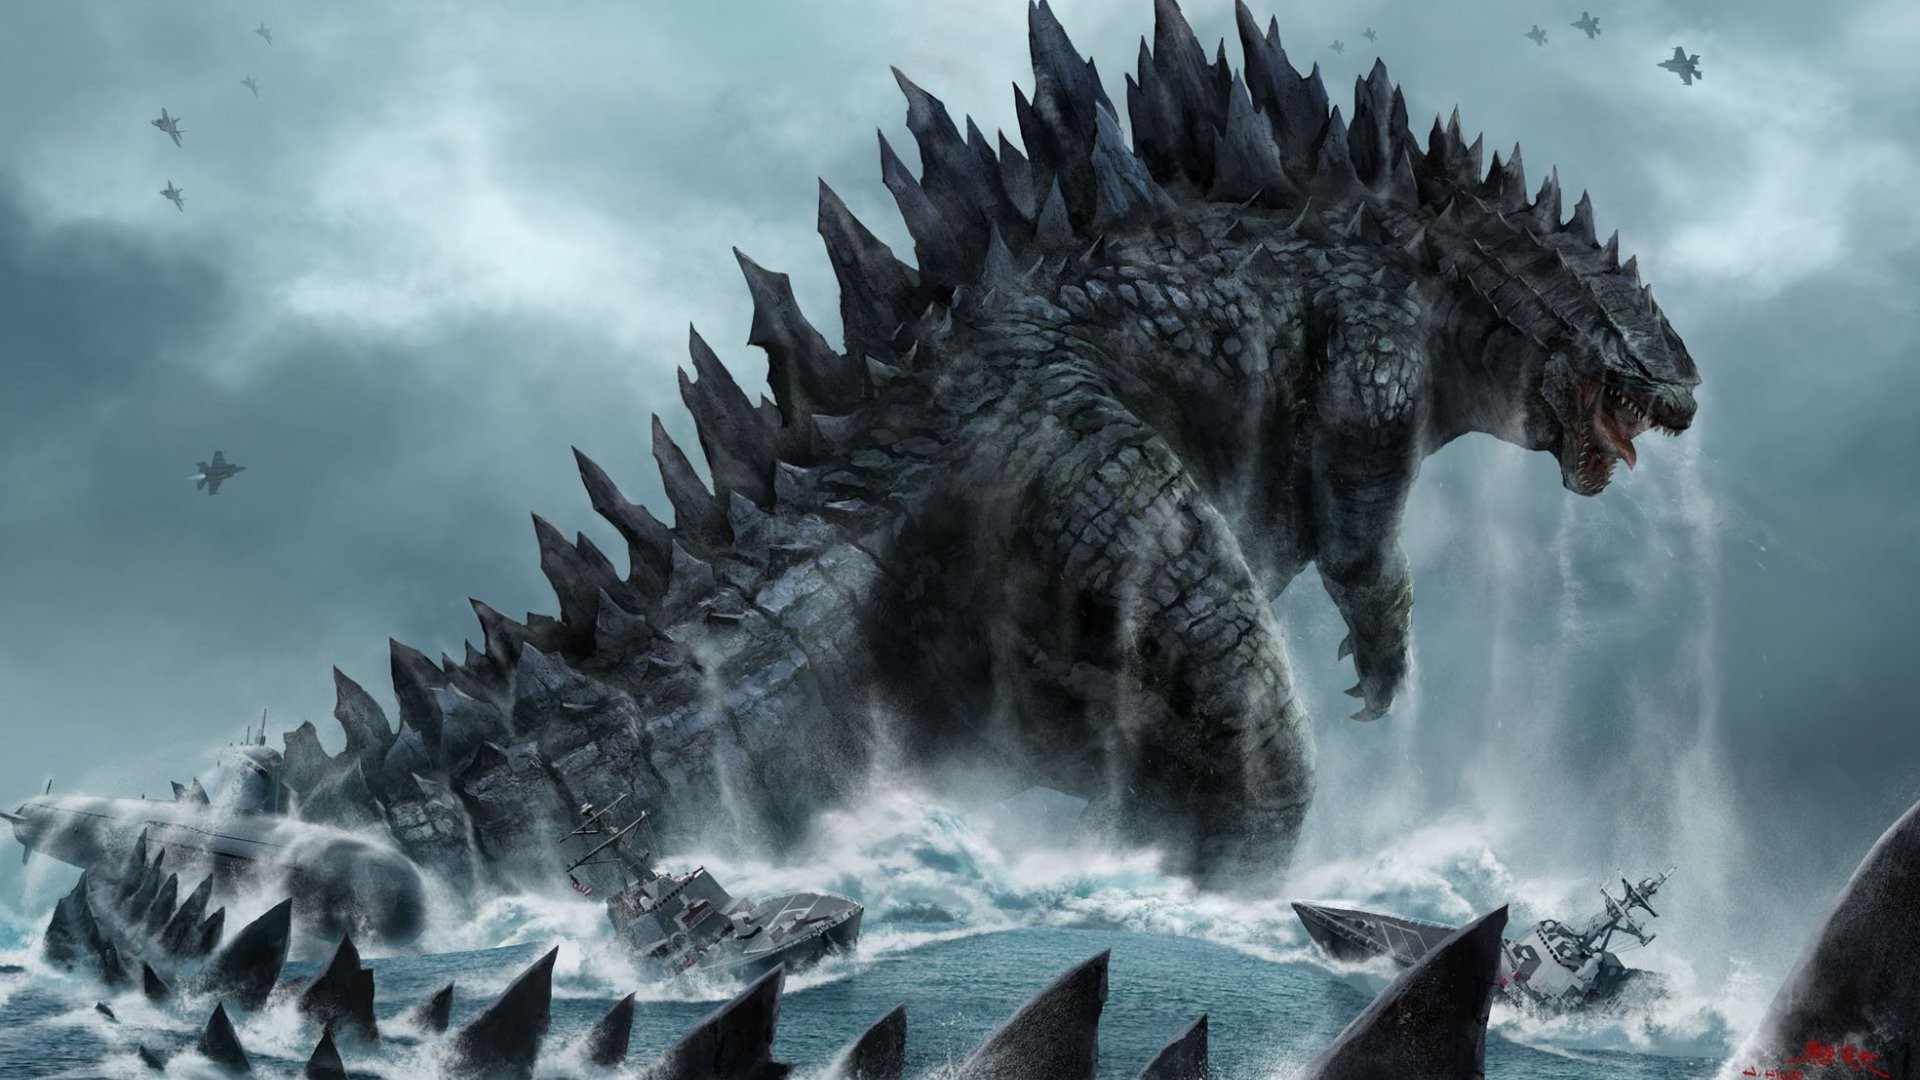 fantasy Art, Digital Art, Creature, Godzilla, Boat, Water, Sea, Waves, Aircraft, Battle, Dinosaurs, Ship, Clouds Wallpaper